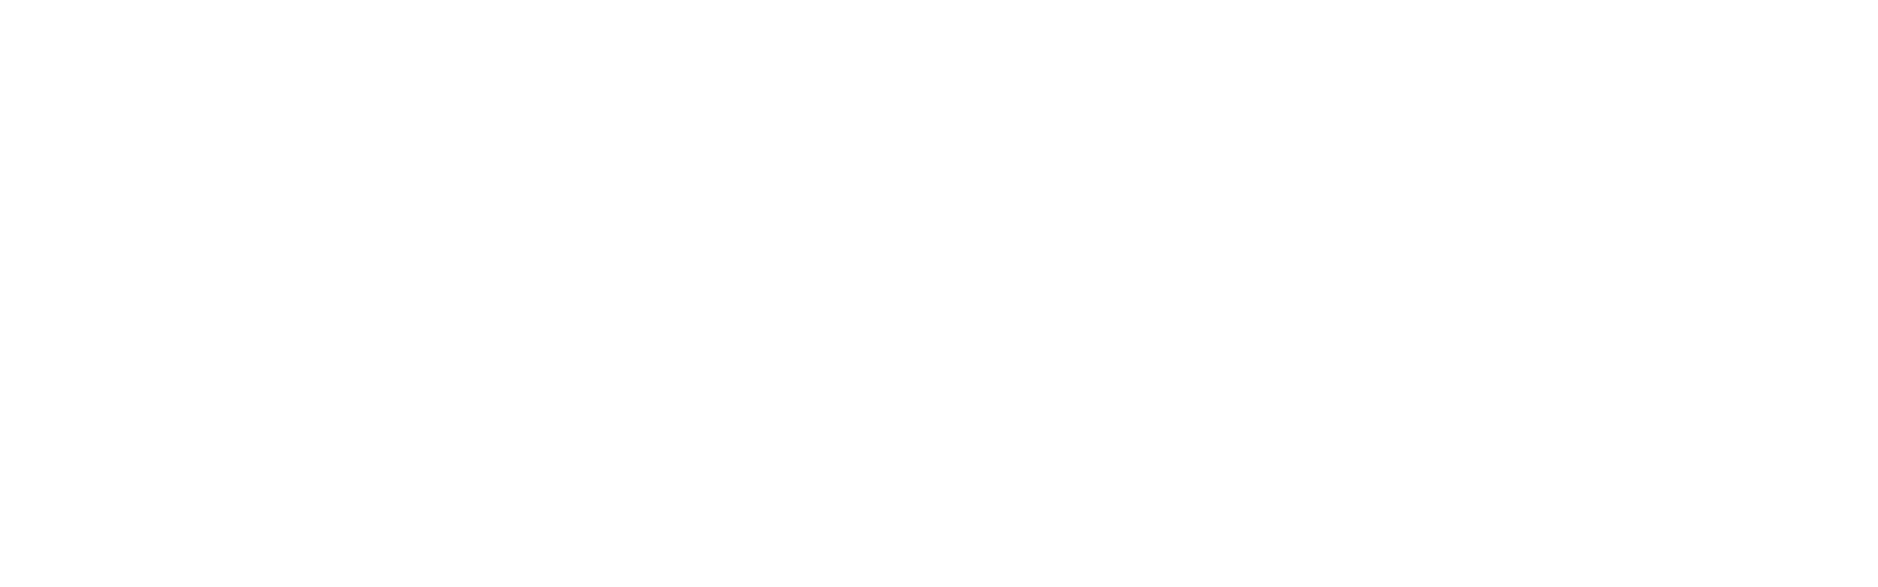 Tech3arabi Logo